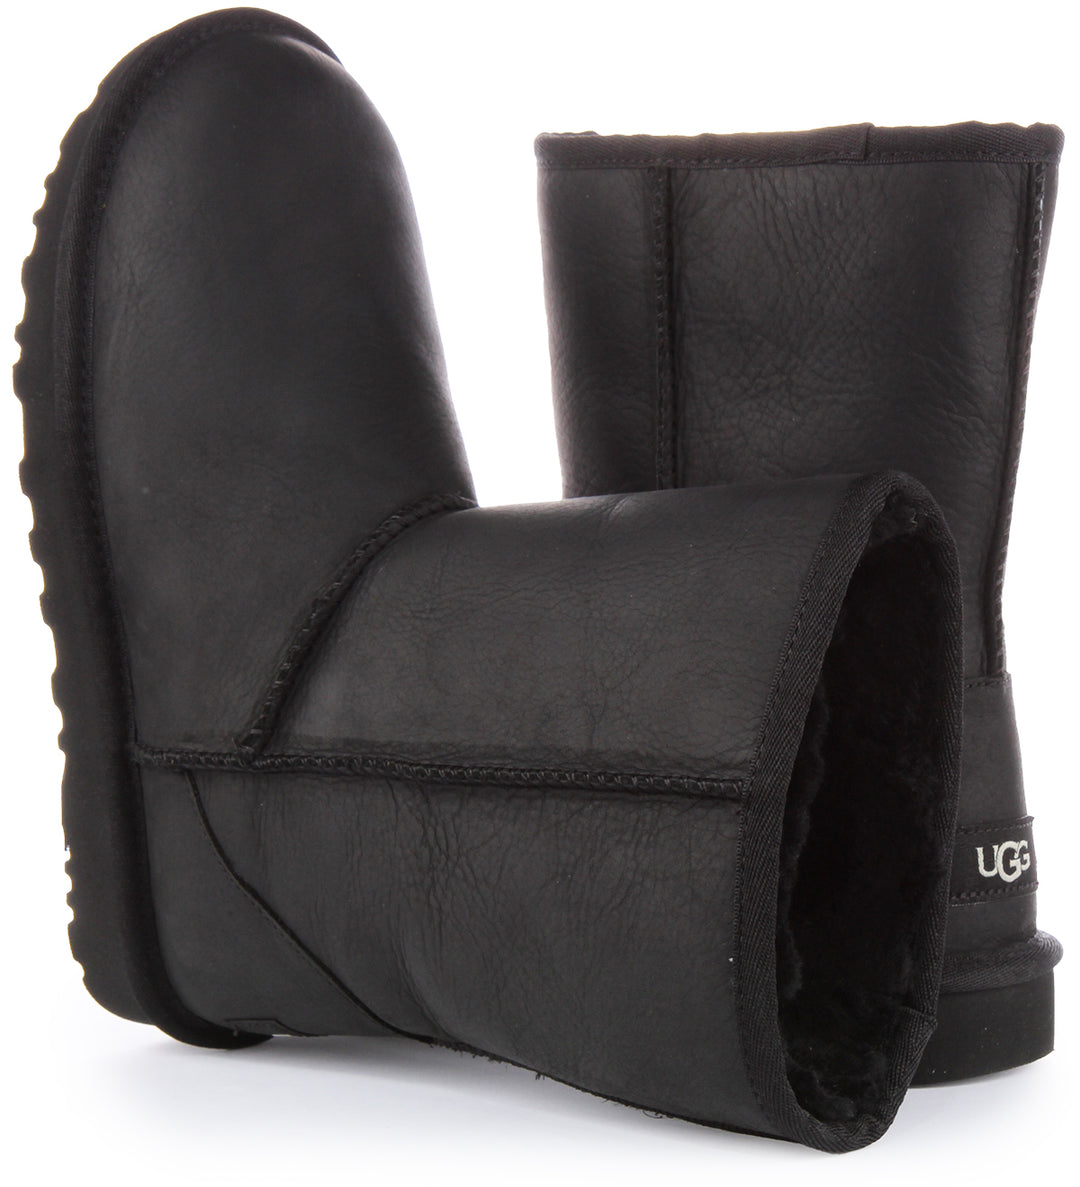 Ugg Australia Classic Short Leather In Black For Women